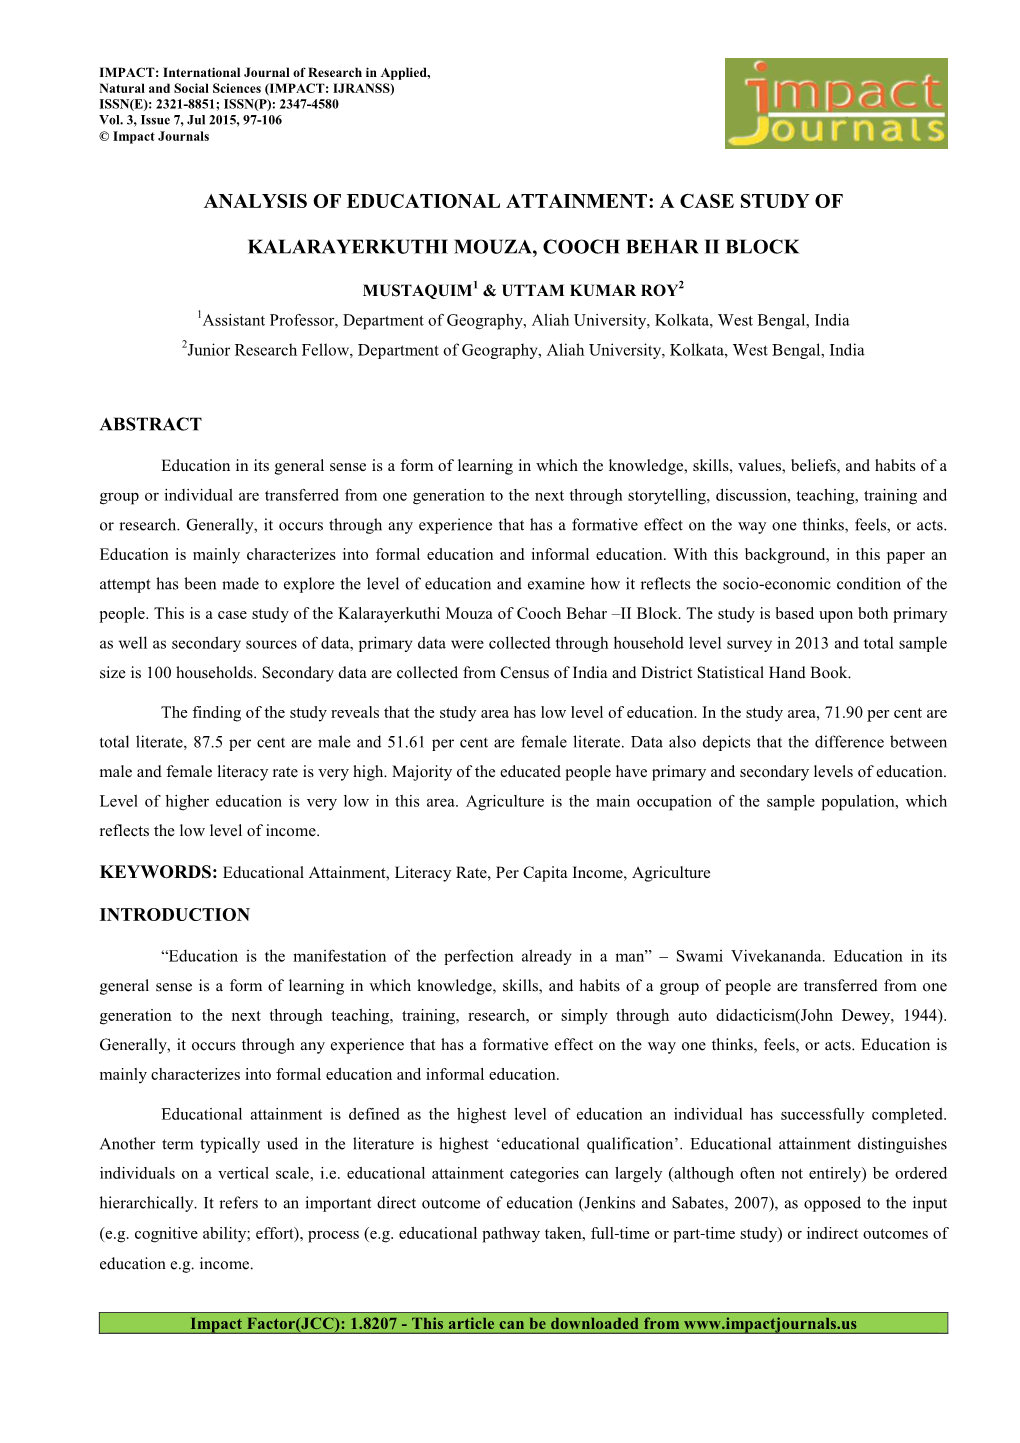 Analysis of Educational Attainment: a Case Study of Kalarayerkuthi Mouza